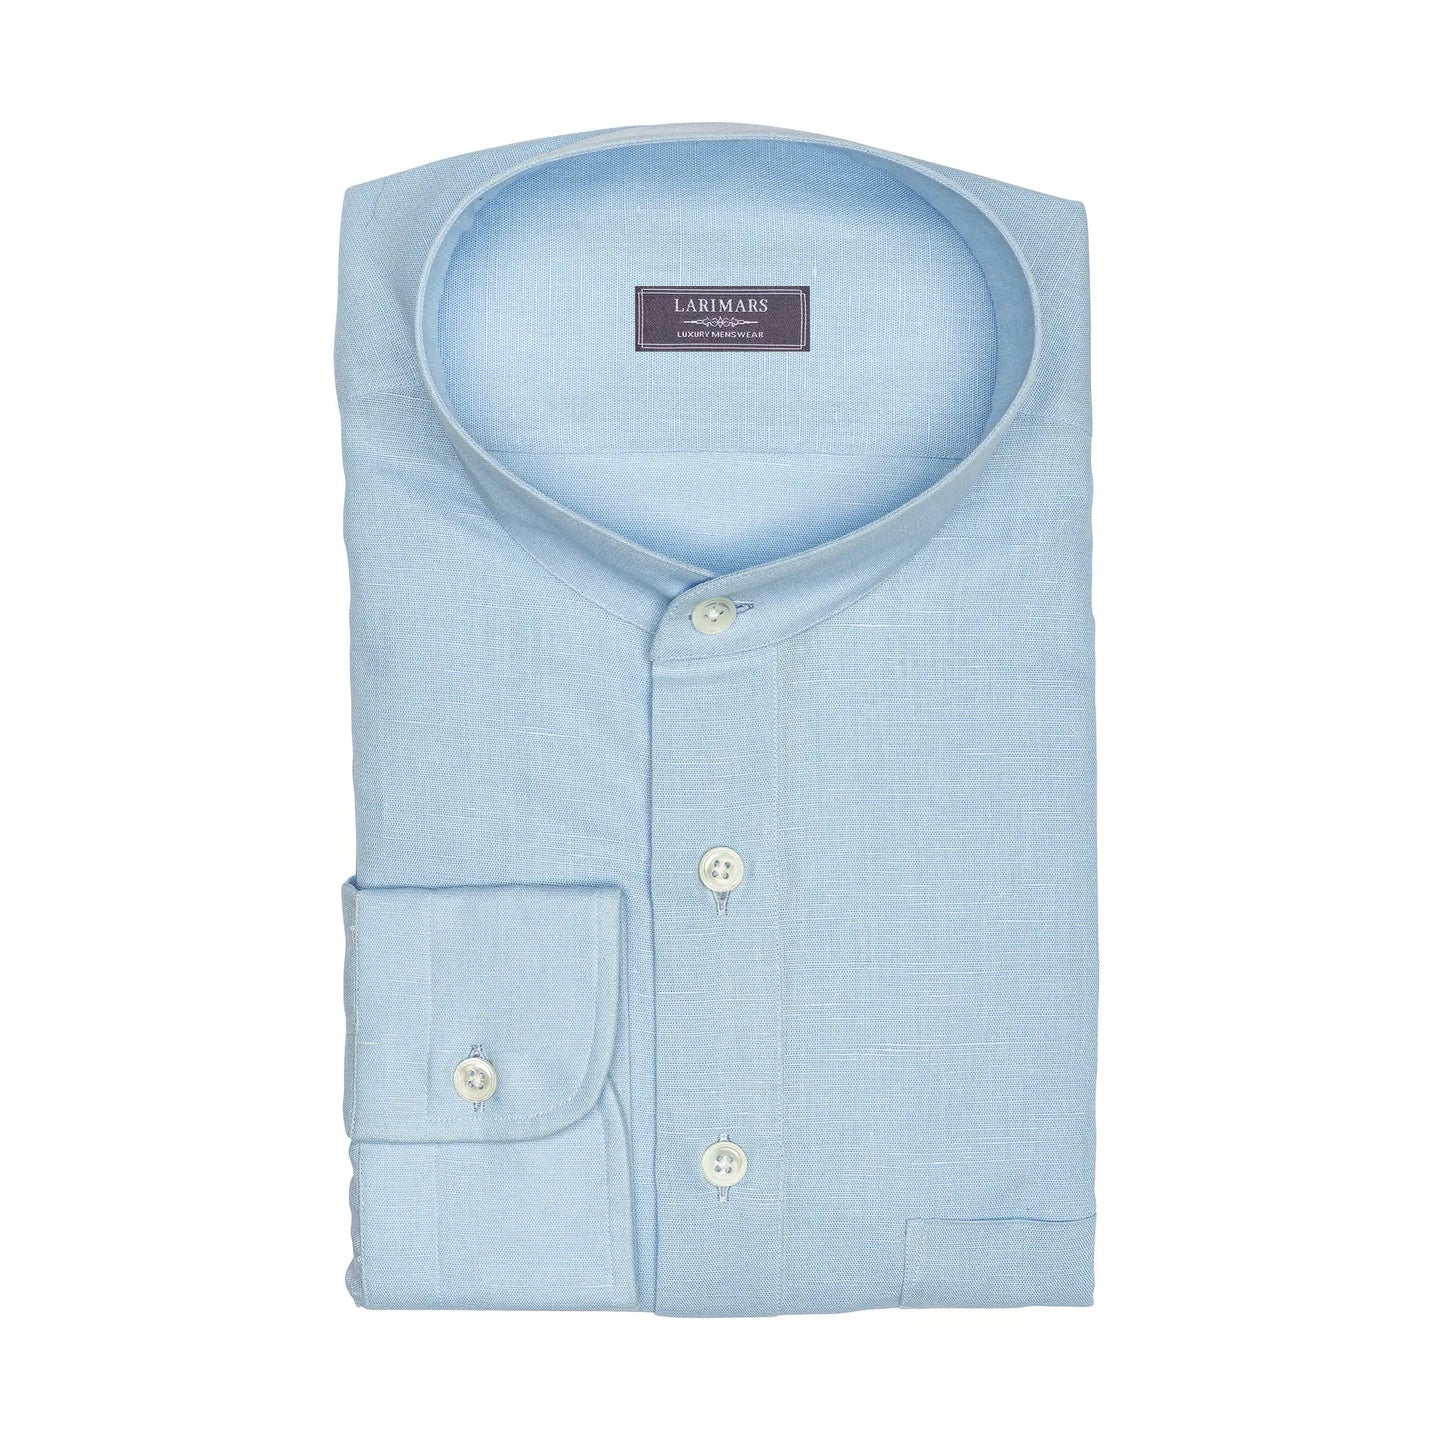 Blue Cotton Linen | Mandarin Collar - Larimars Clothing Men's Formal and casual wear shirts